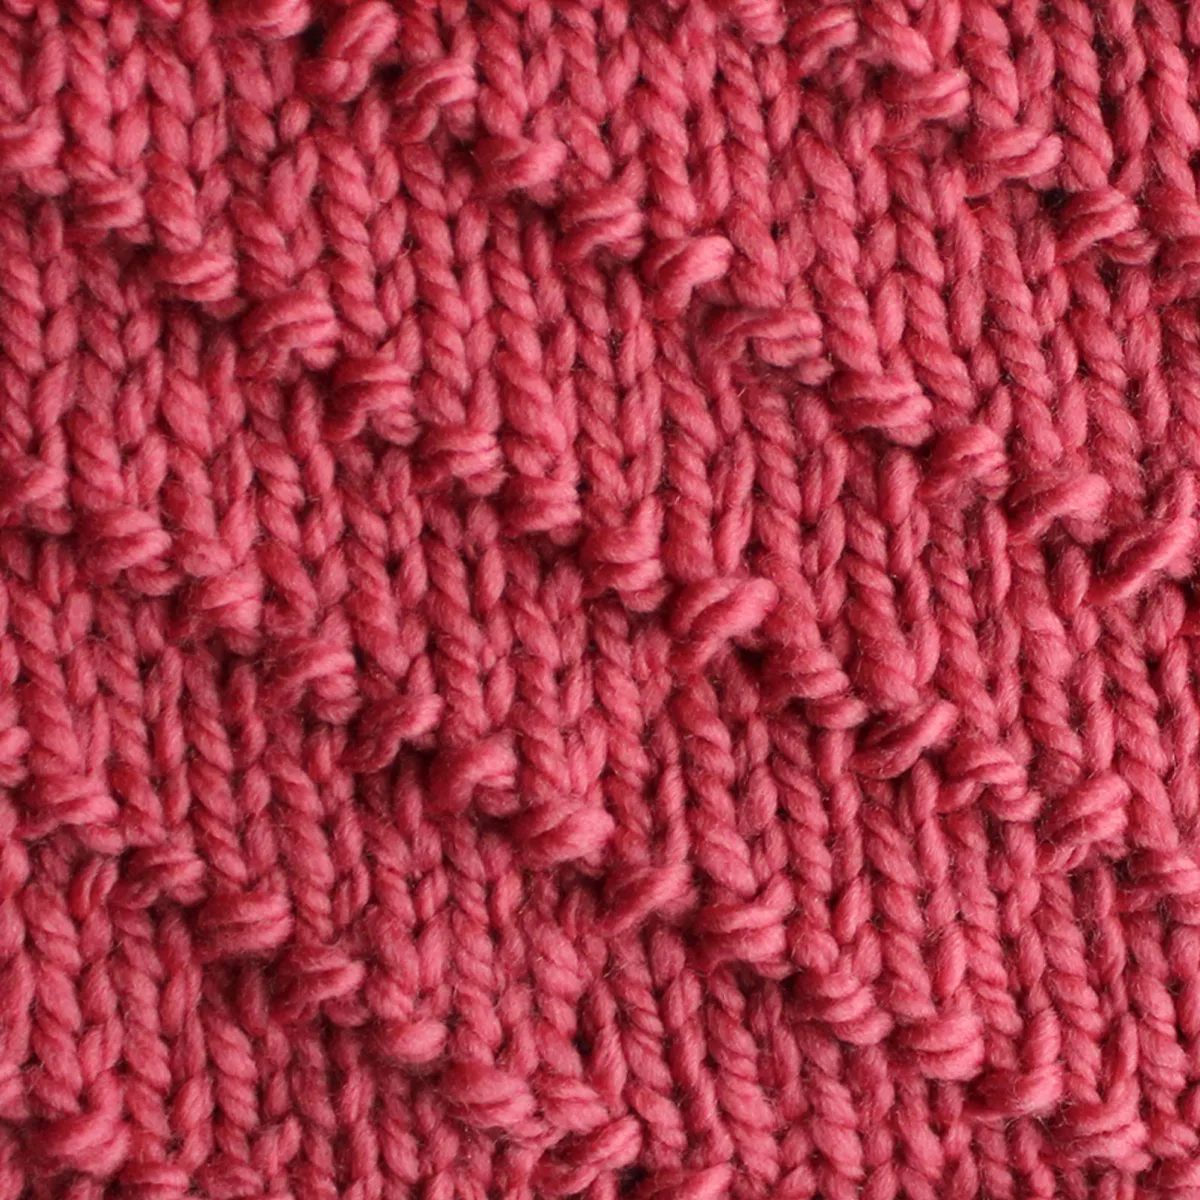 Diagonal Seed Knit Stitch Pattern in pink yarn.